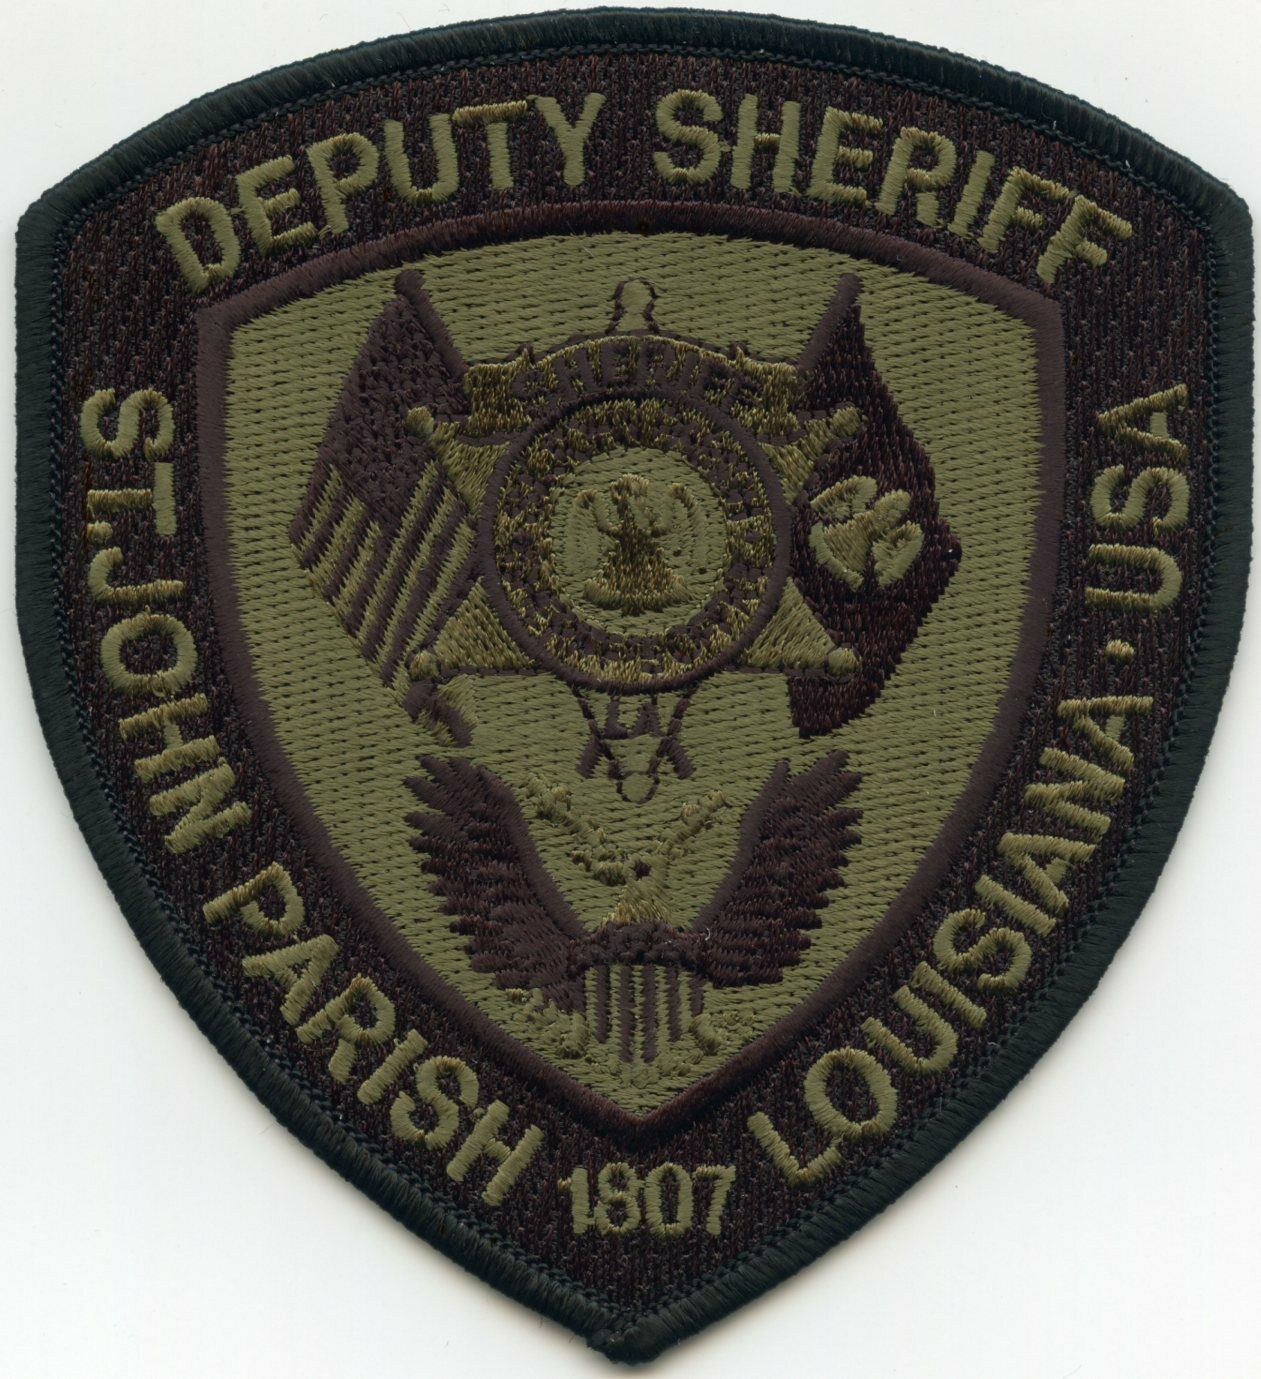 SAINT ST JOHN PARISH LOUISIANA subdued DEPUTY SHERIFF POLICE PATCH